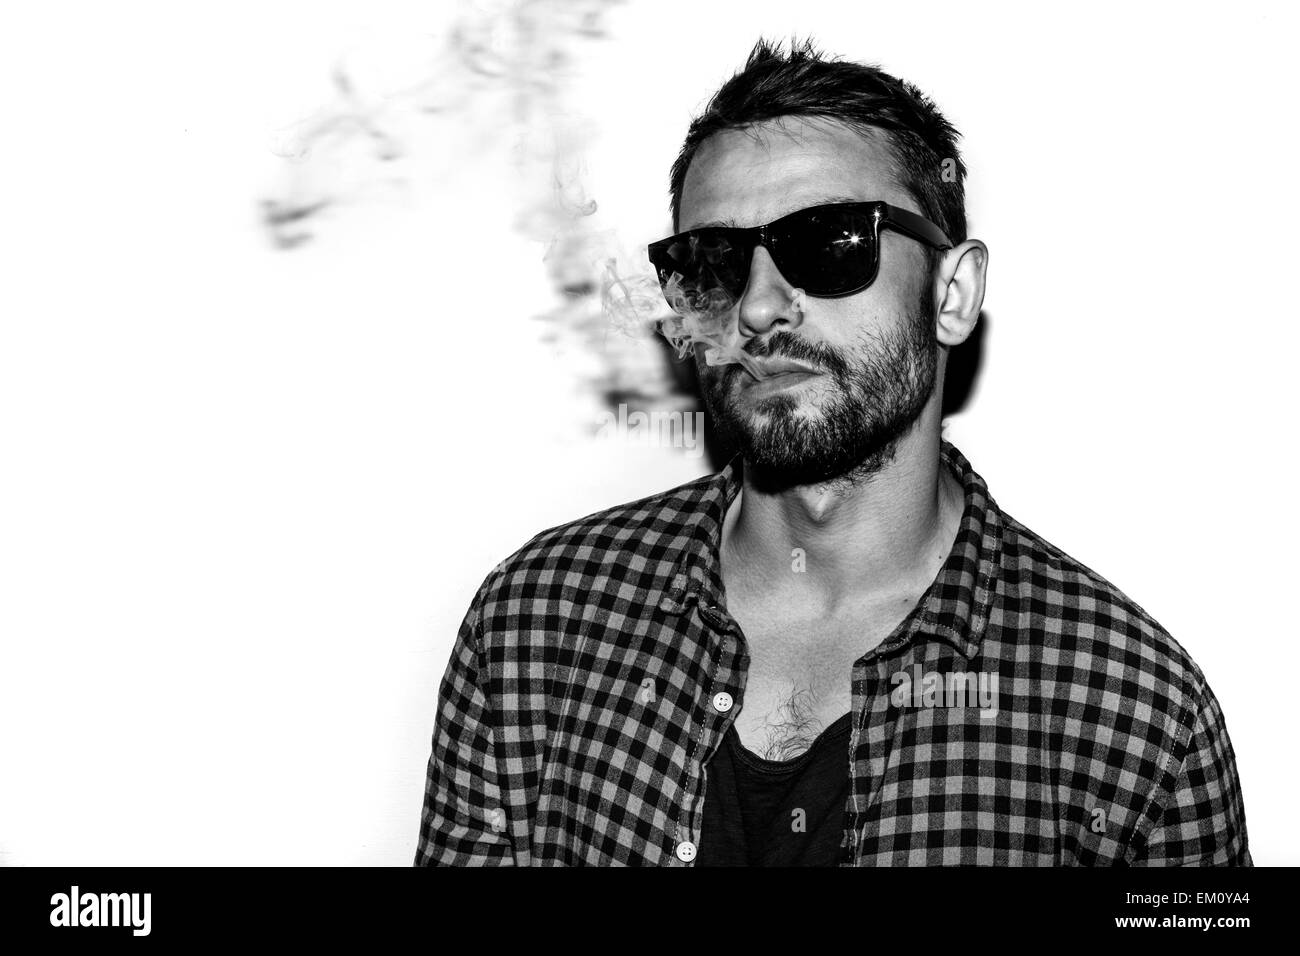 man smoking cigarette black and white portrait Stock Photo